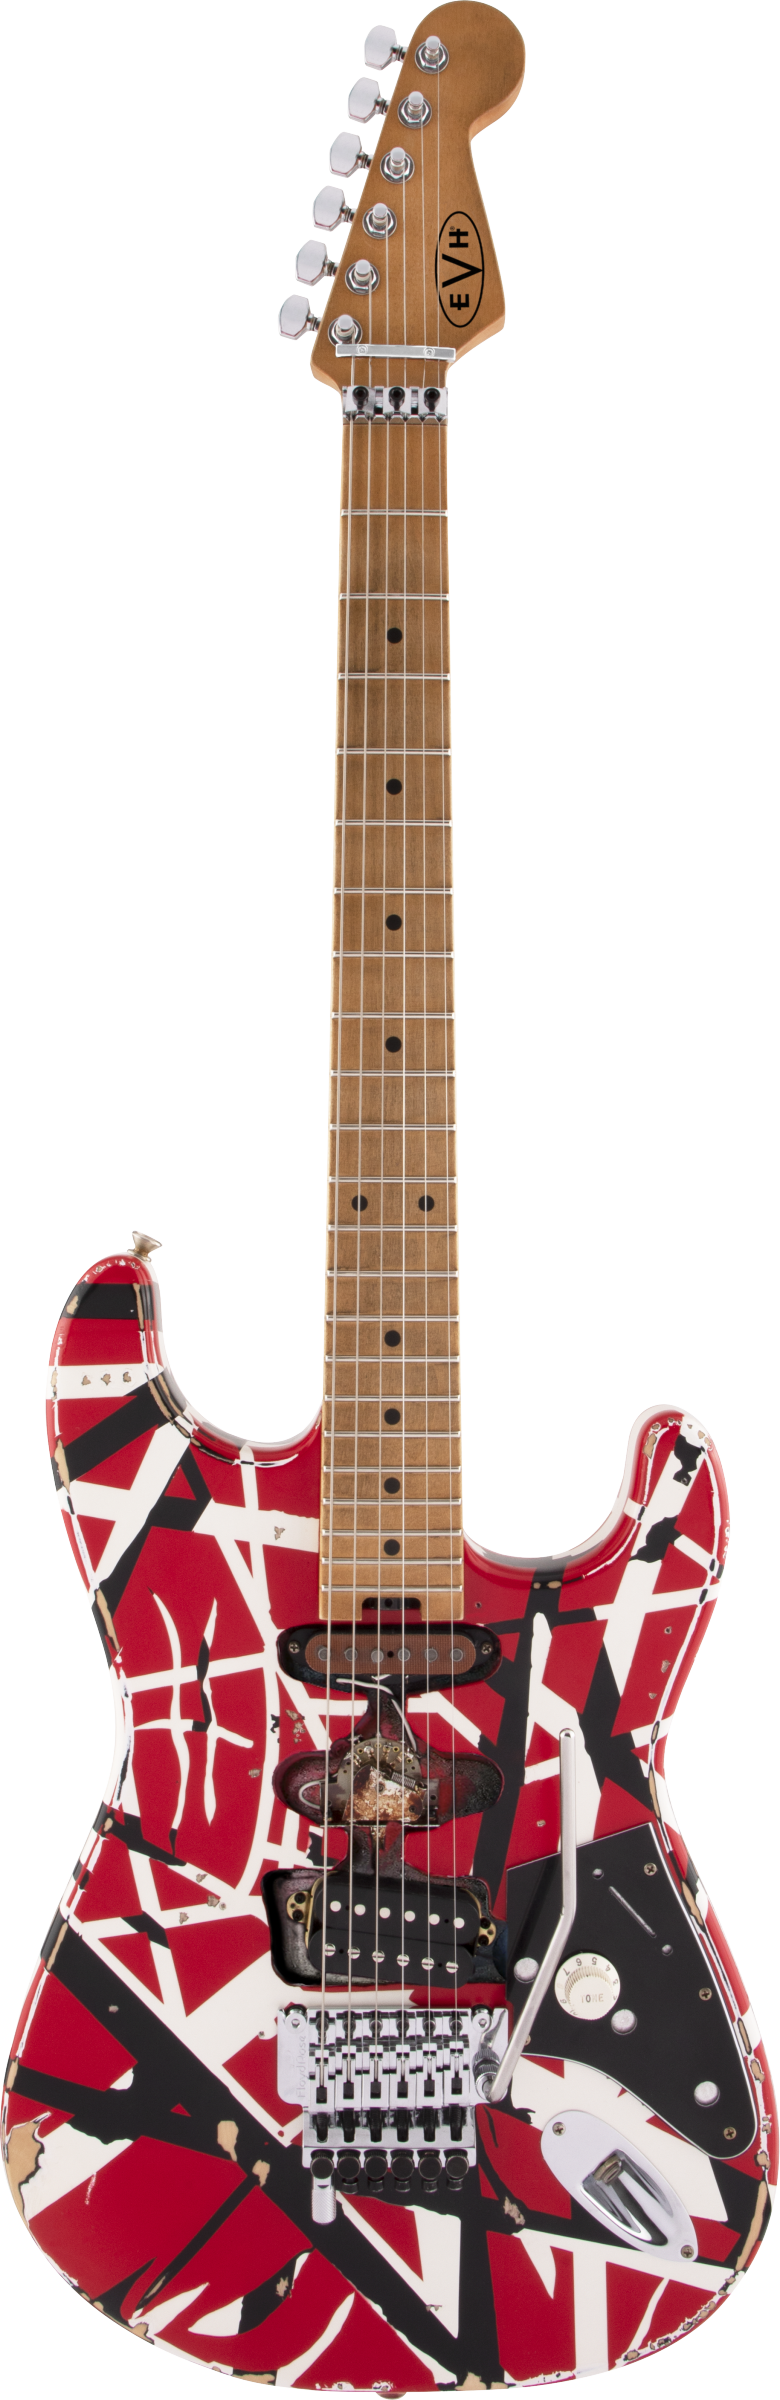 Red EVH worn electric guitar striped series Frankie with Black Stripes Tone Shop Guitars DFW